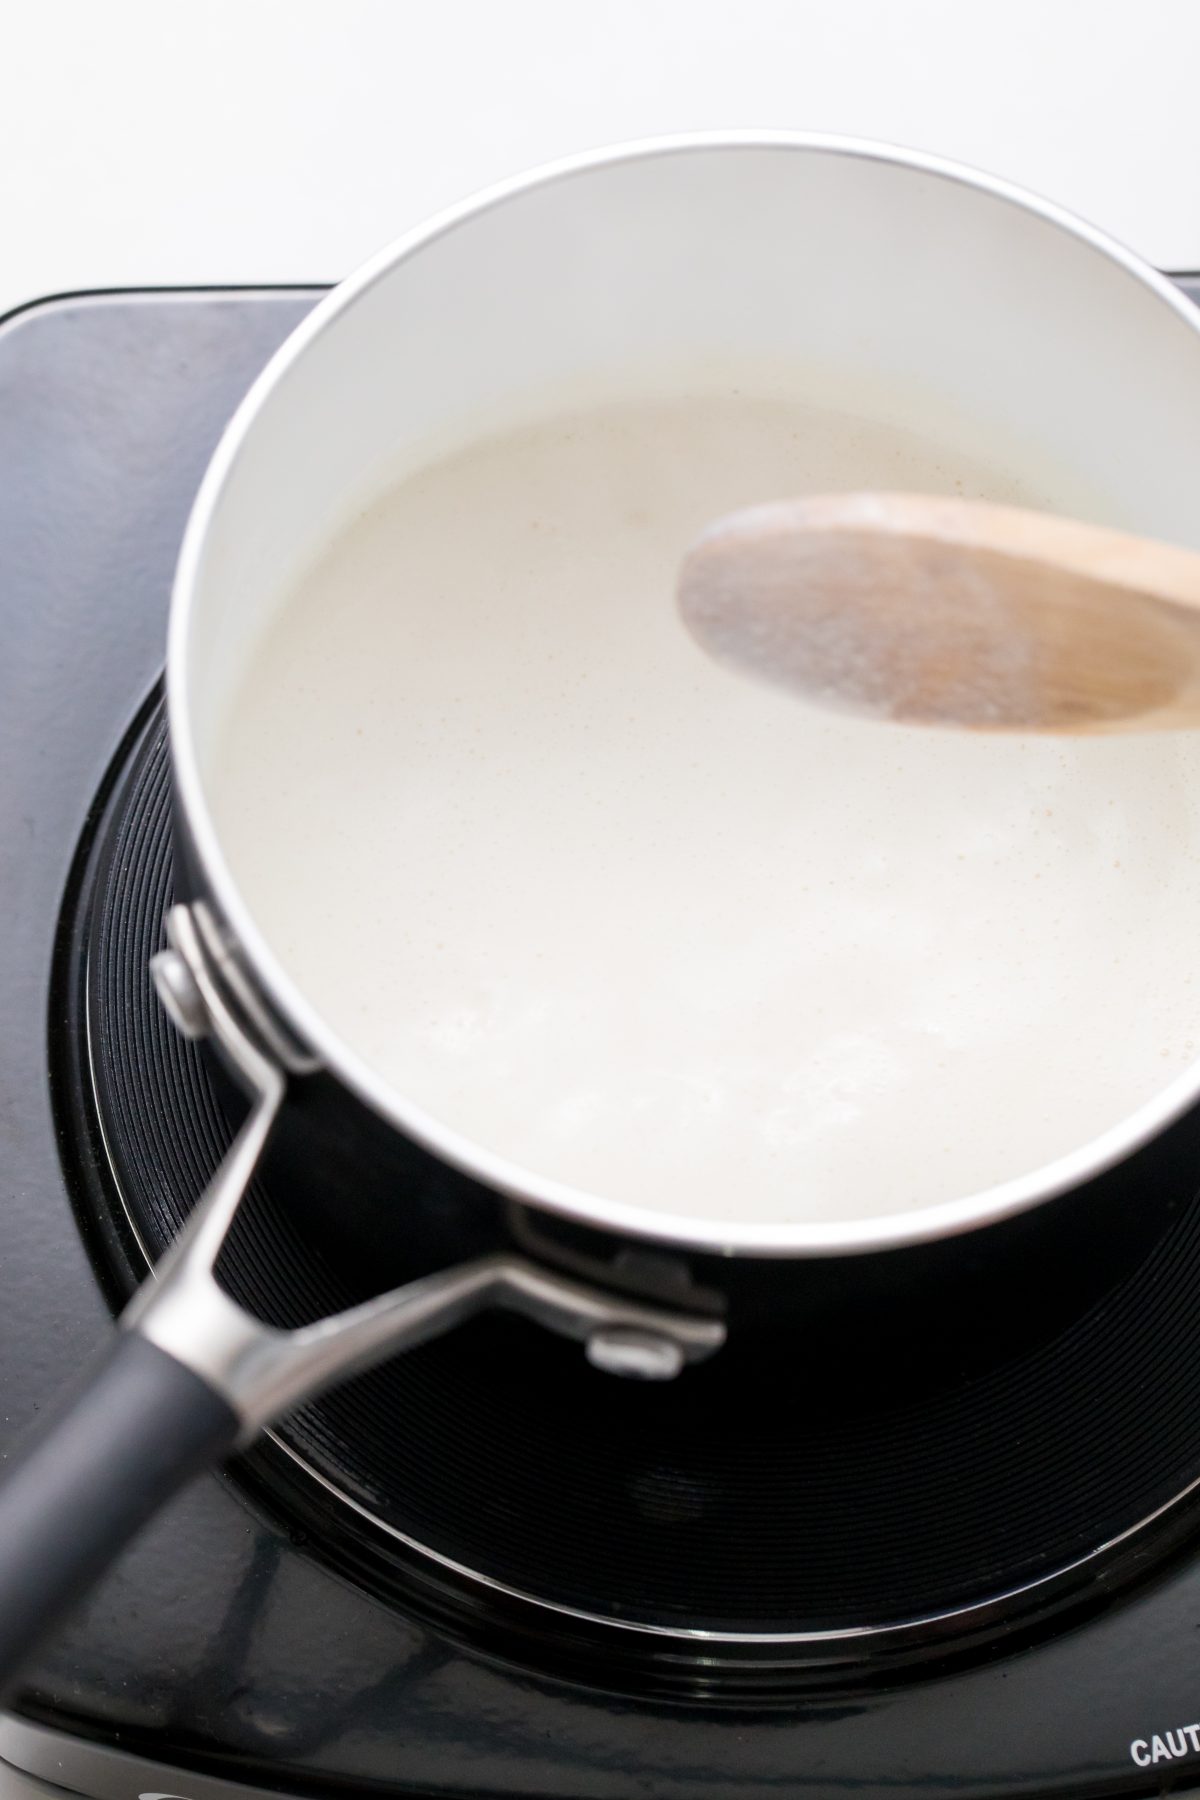 5D4B5565 - Sweet Potato Casserole with Pecan Topping - Make a warm vanilla cream